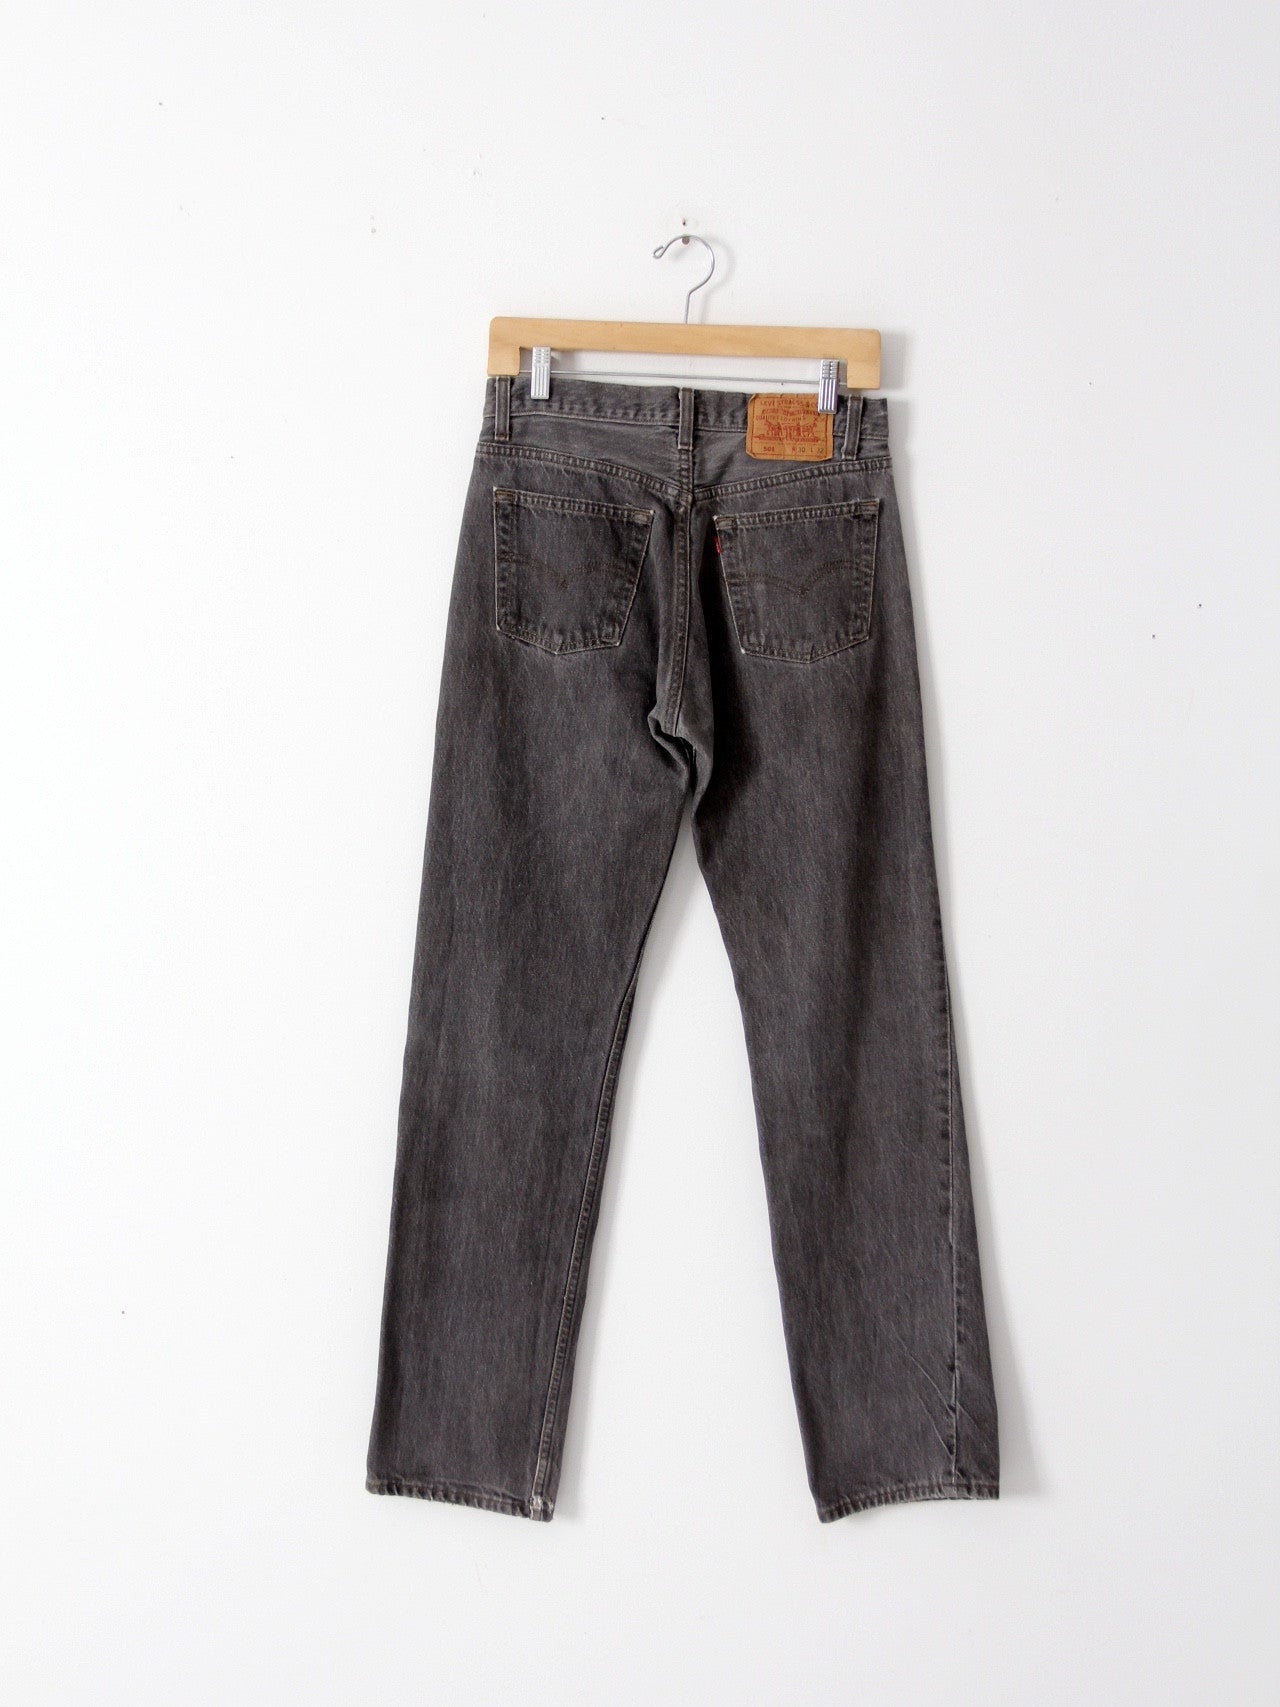 BREAKING UPDATE: Levi's Jeans From 1873 Sells For $100,000,- Long John